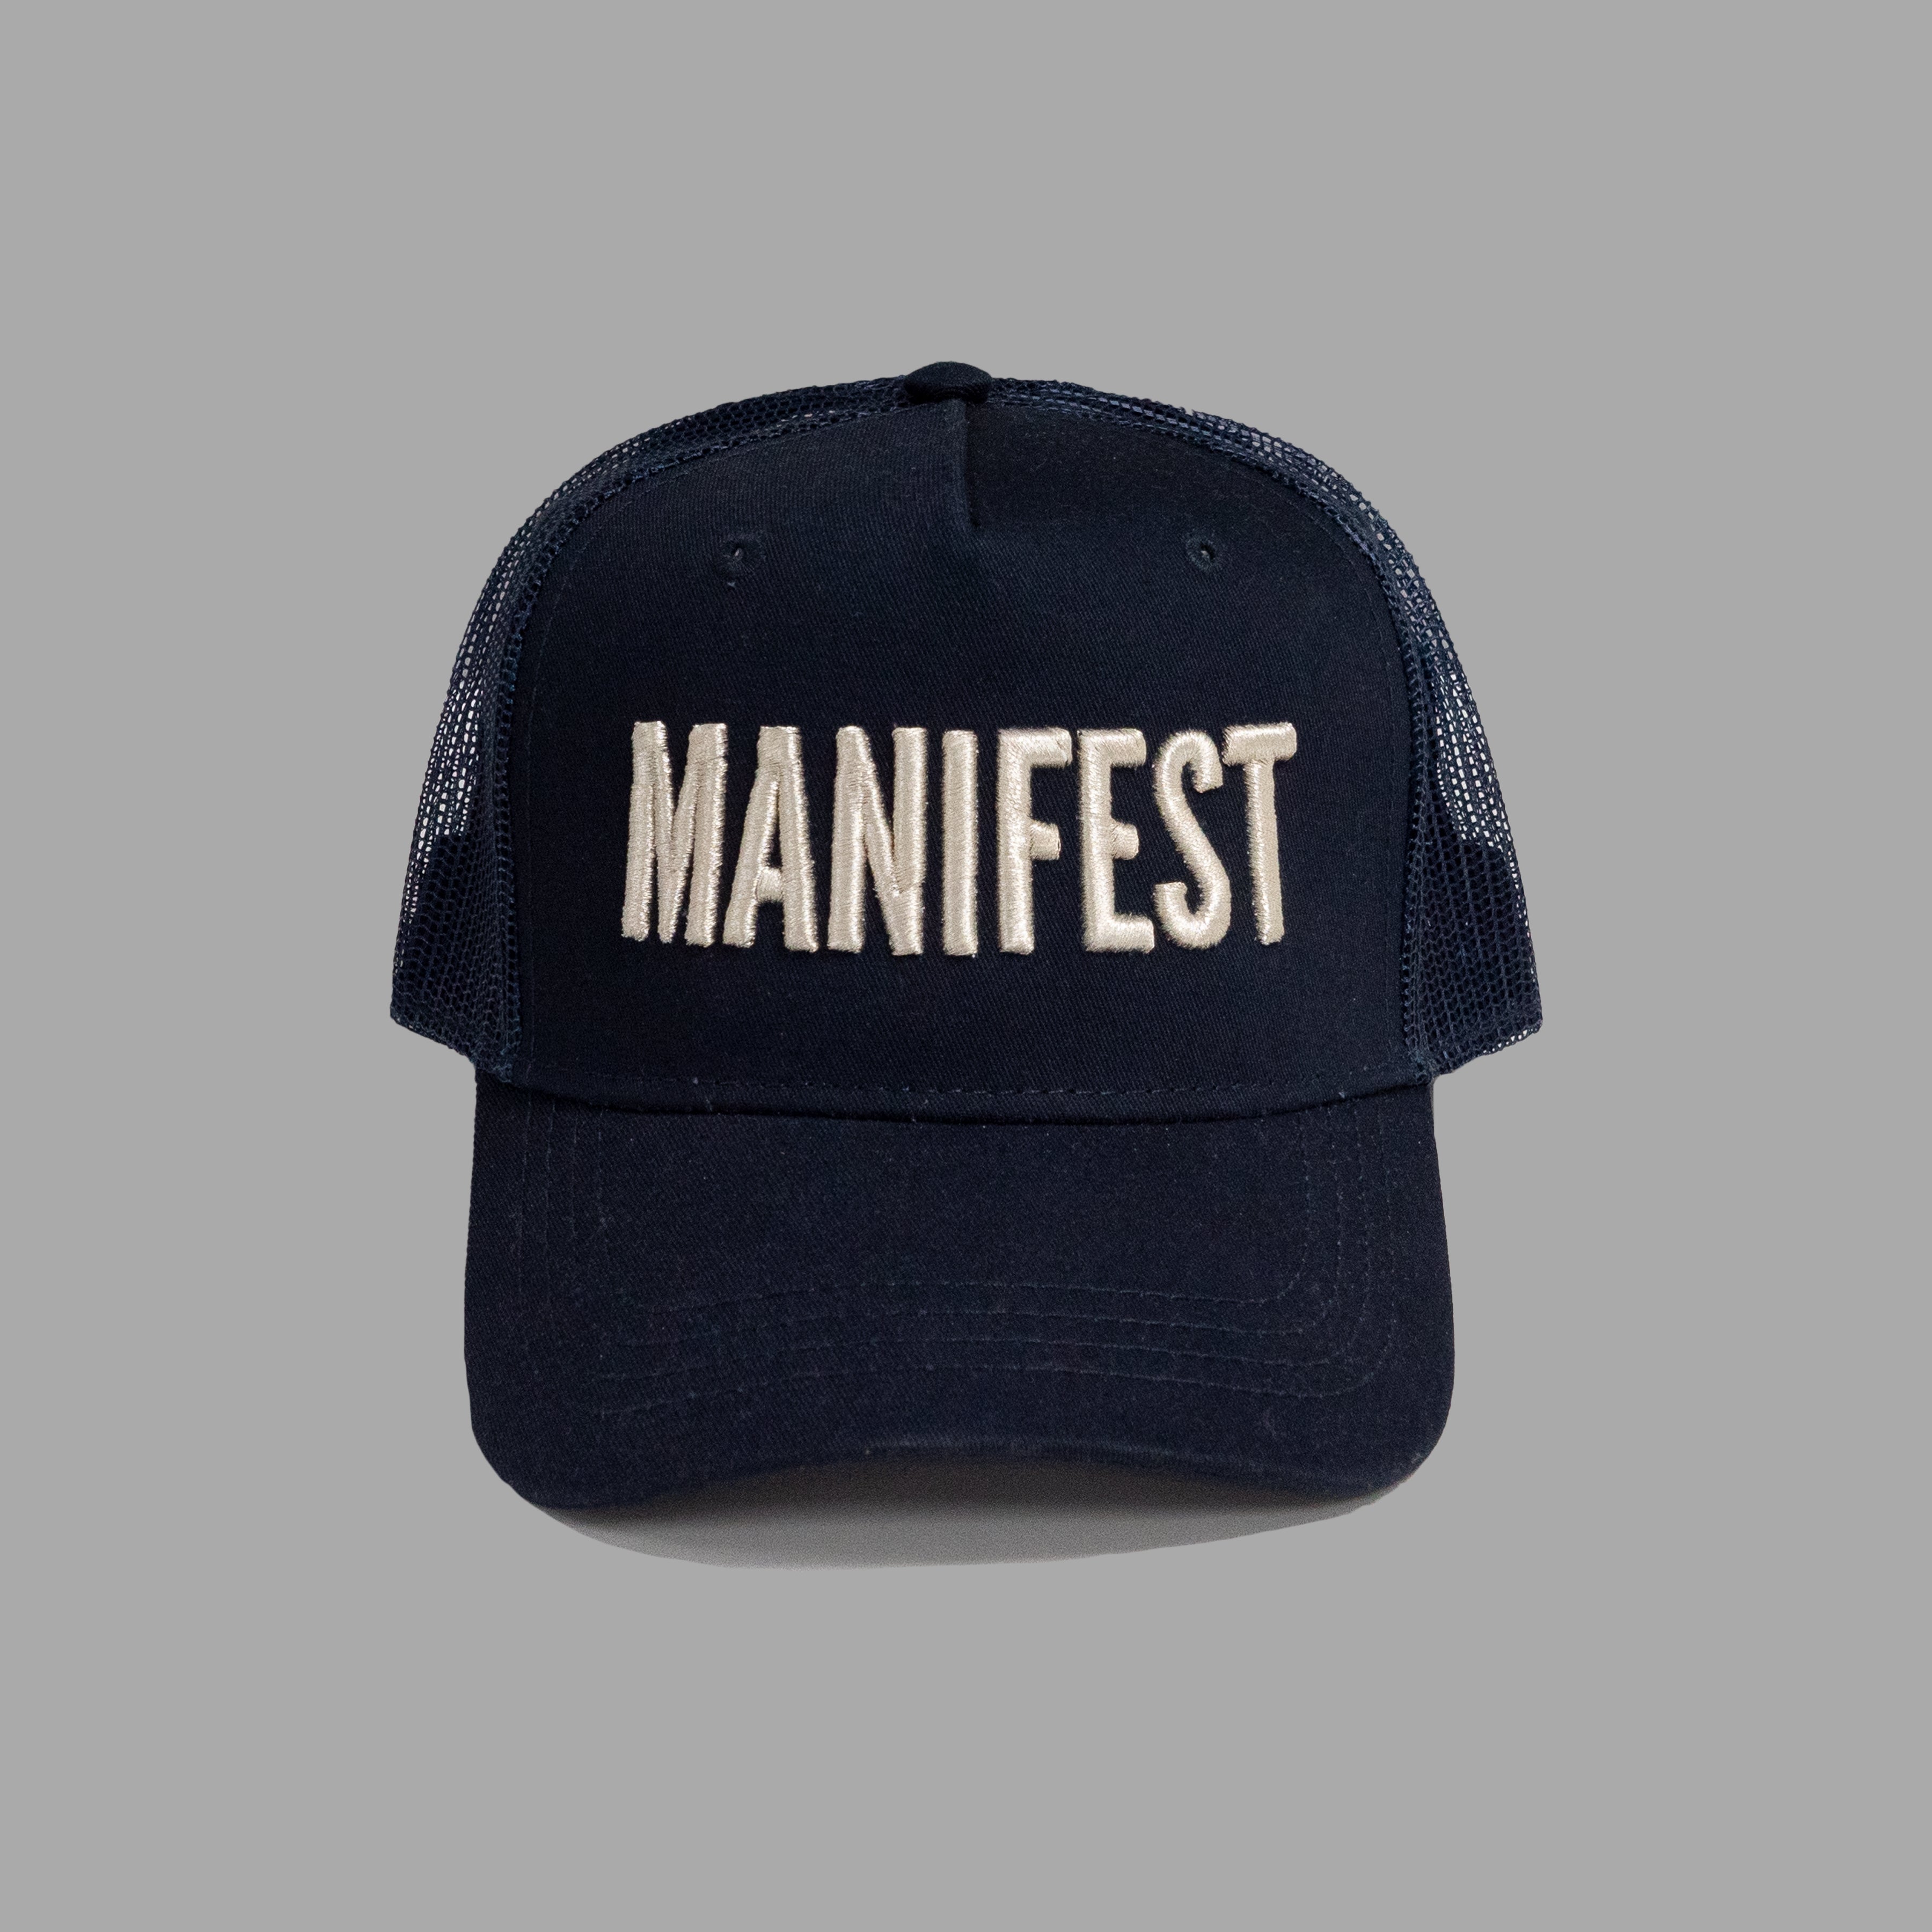 'MANIFEST' Snapback Cap - Navy